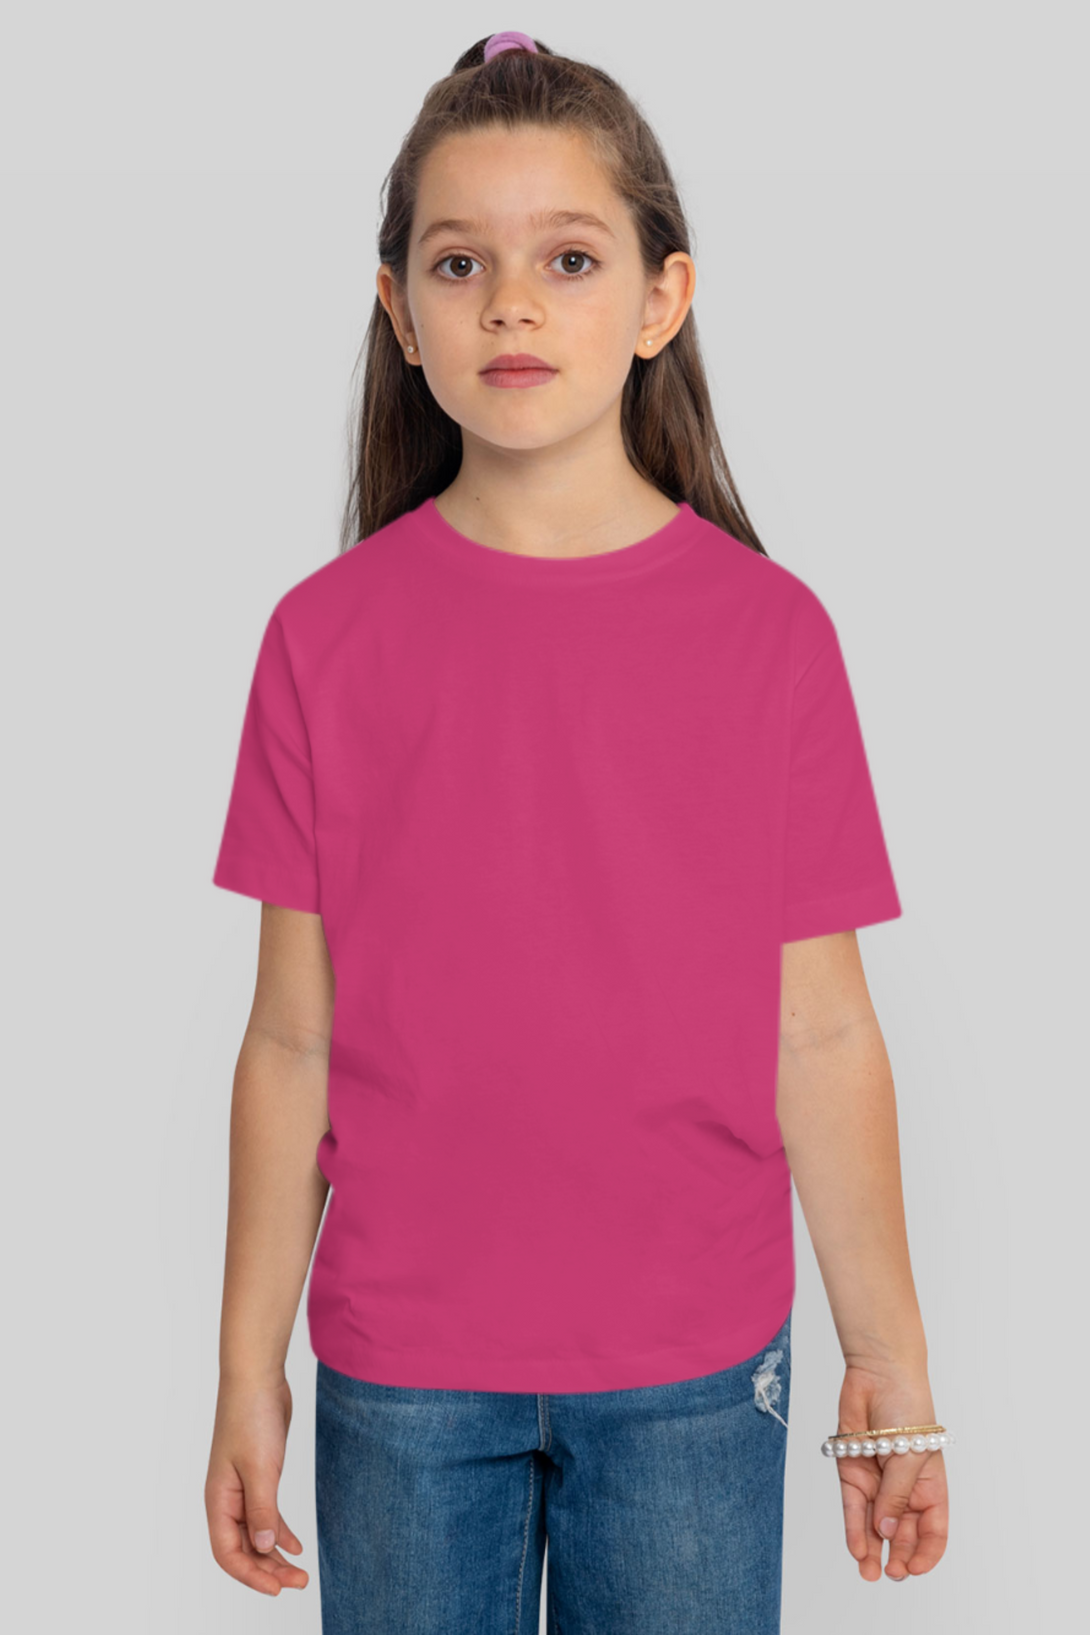 Pink T-Shirt For Girl - WowWaves - 2